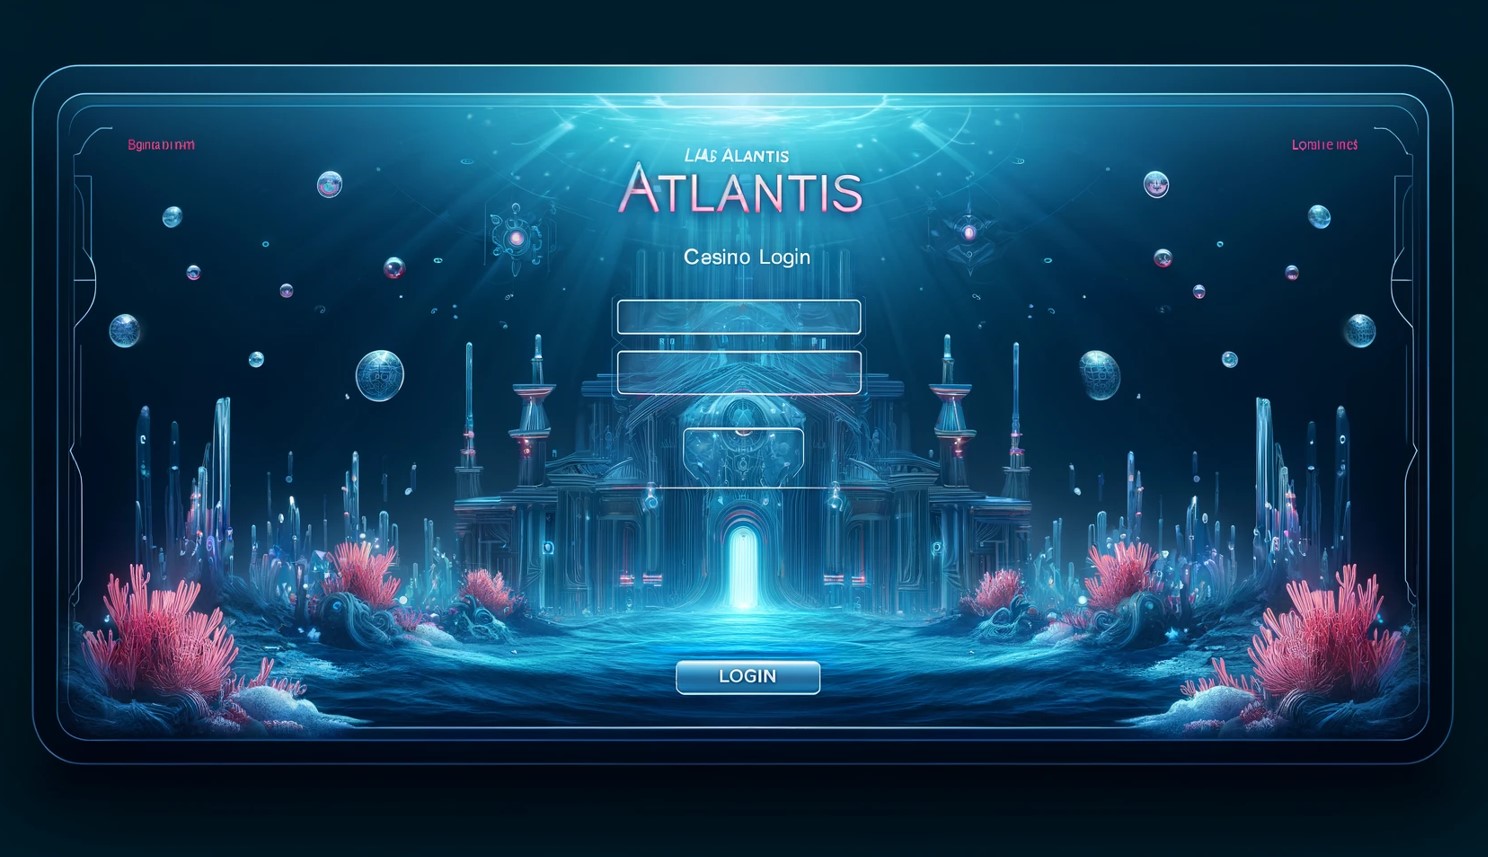 Welcome to the Las Atlantis casino login 2